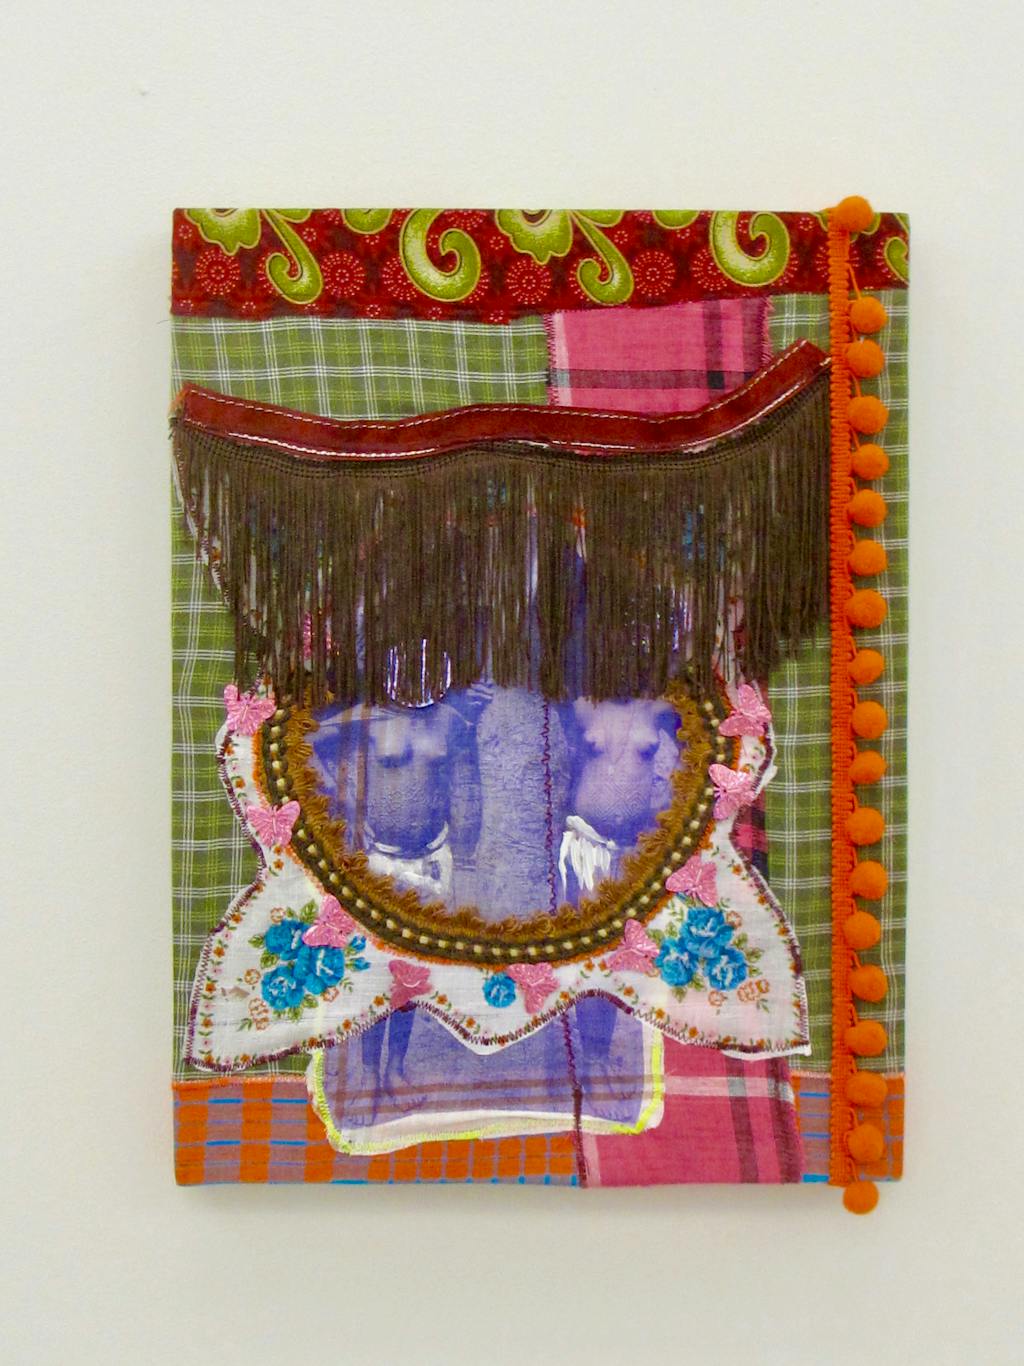 Patricia Kaersenhout
Distant Bodies, 2011
Collage of textiles, photographic print on handkerchief
Pangi Fabric, glitters, embroidery, stitching, paint
40 x 30 cm, unique (PK2011-1) - © Paris Internationale